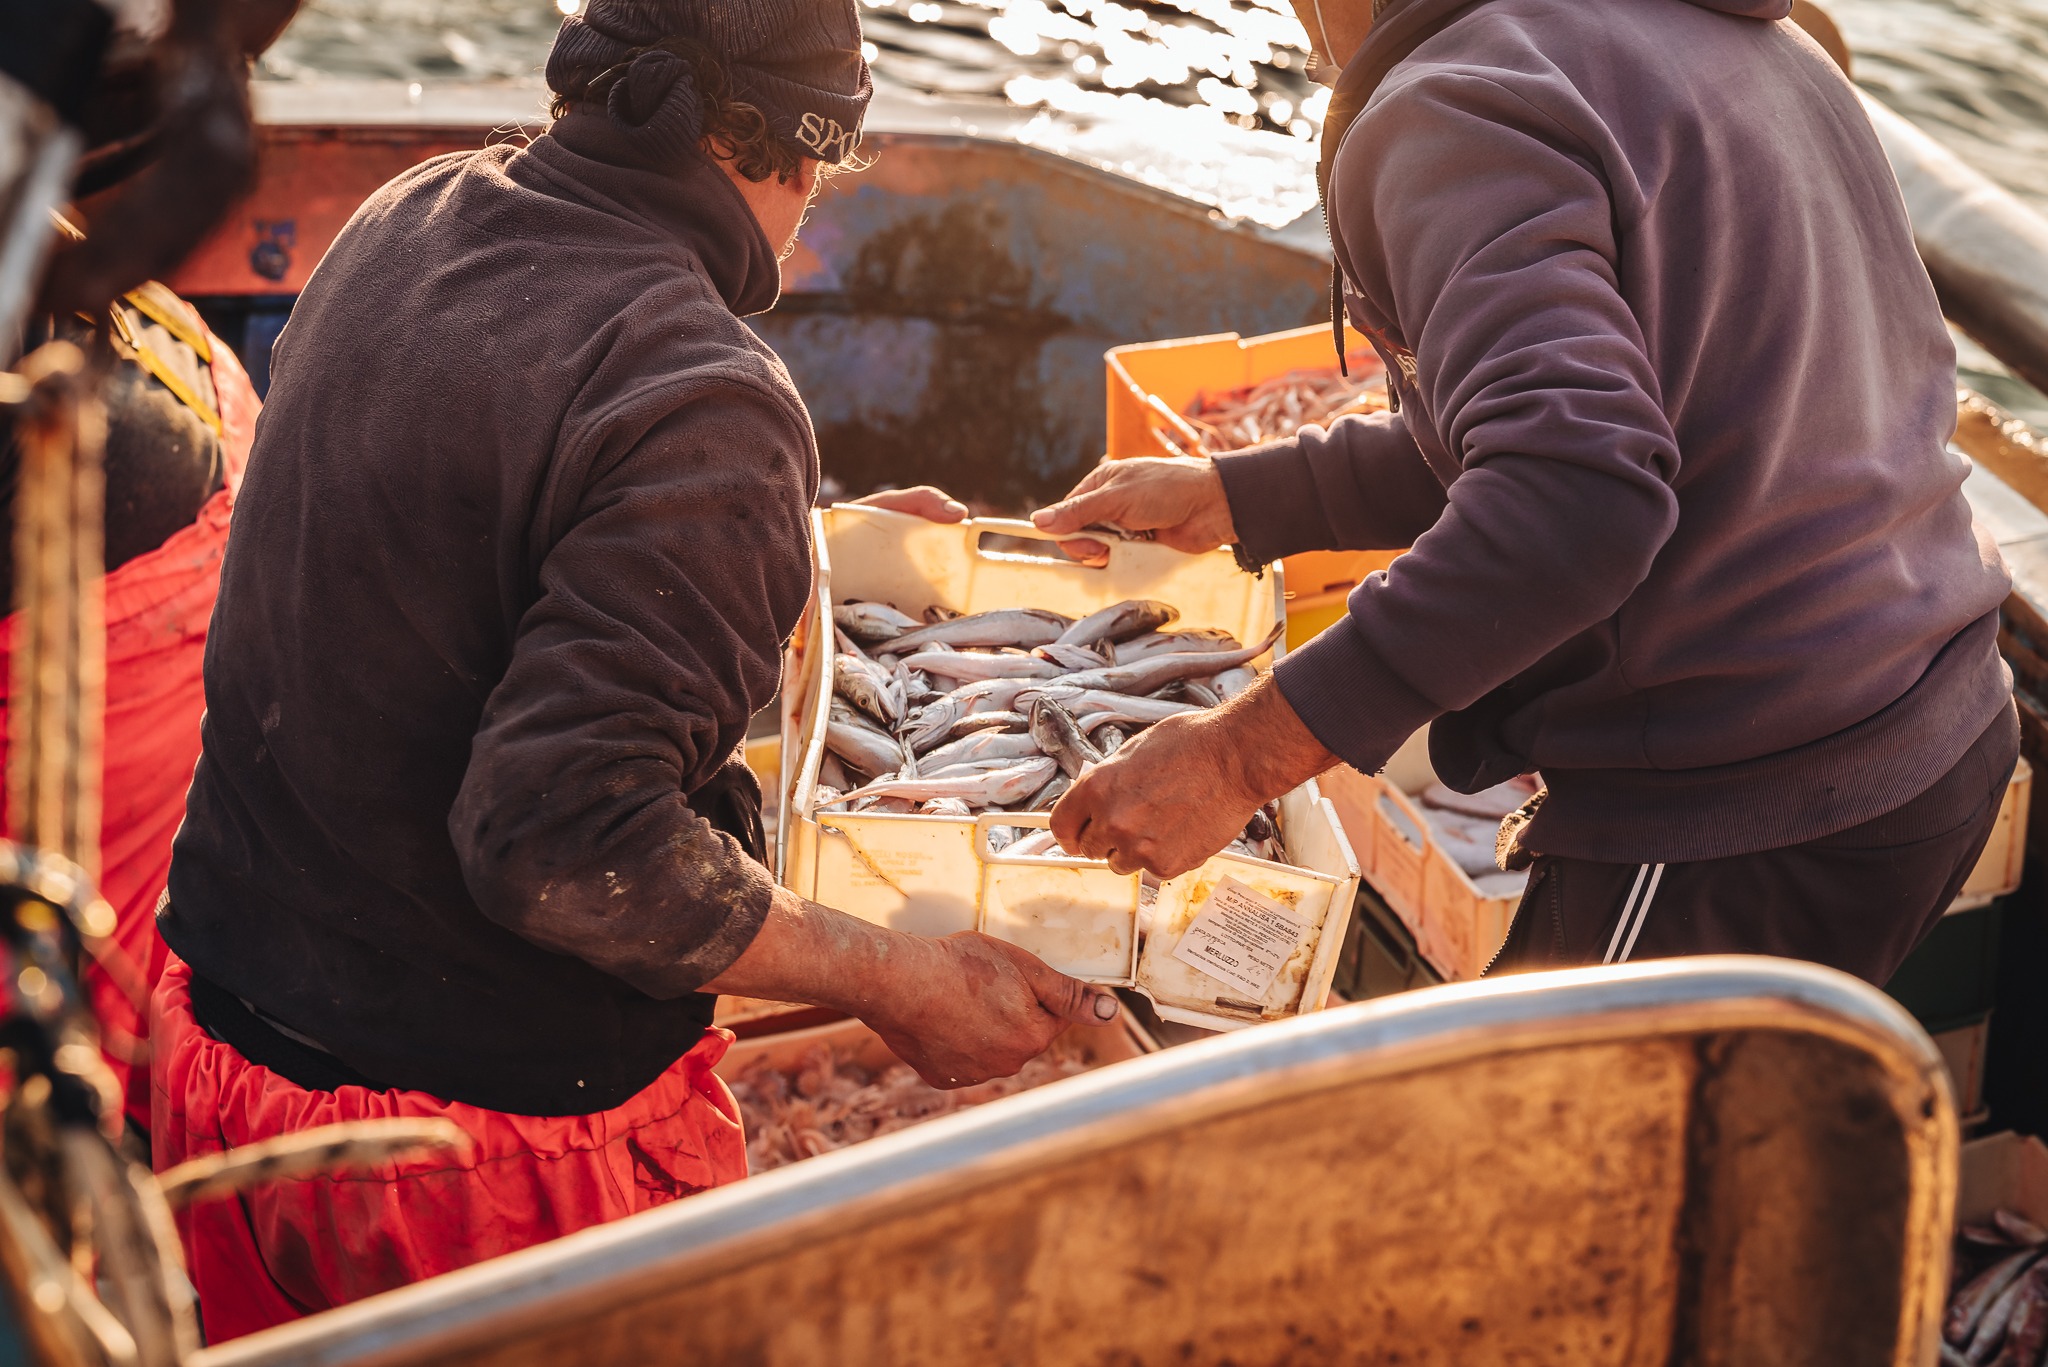 Mola di Bari, Italy – January 2023: local life scene by the fish